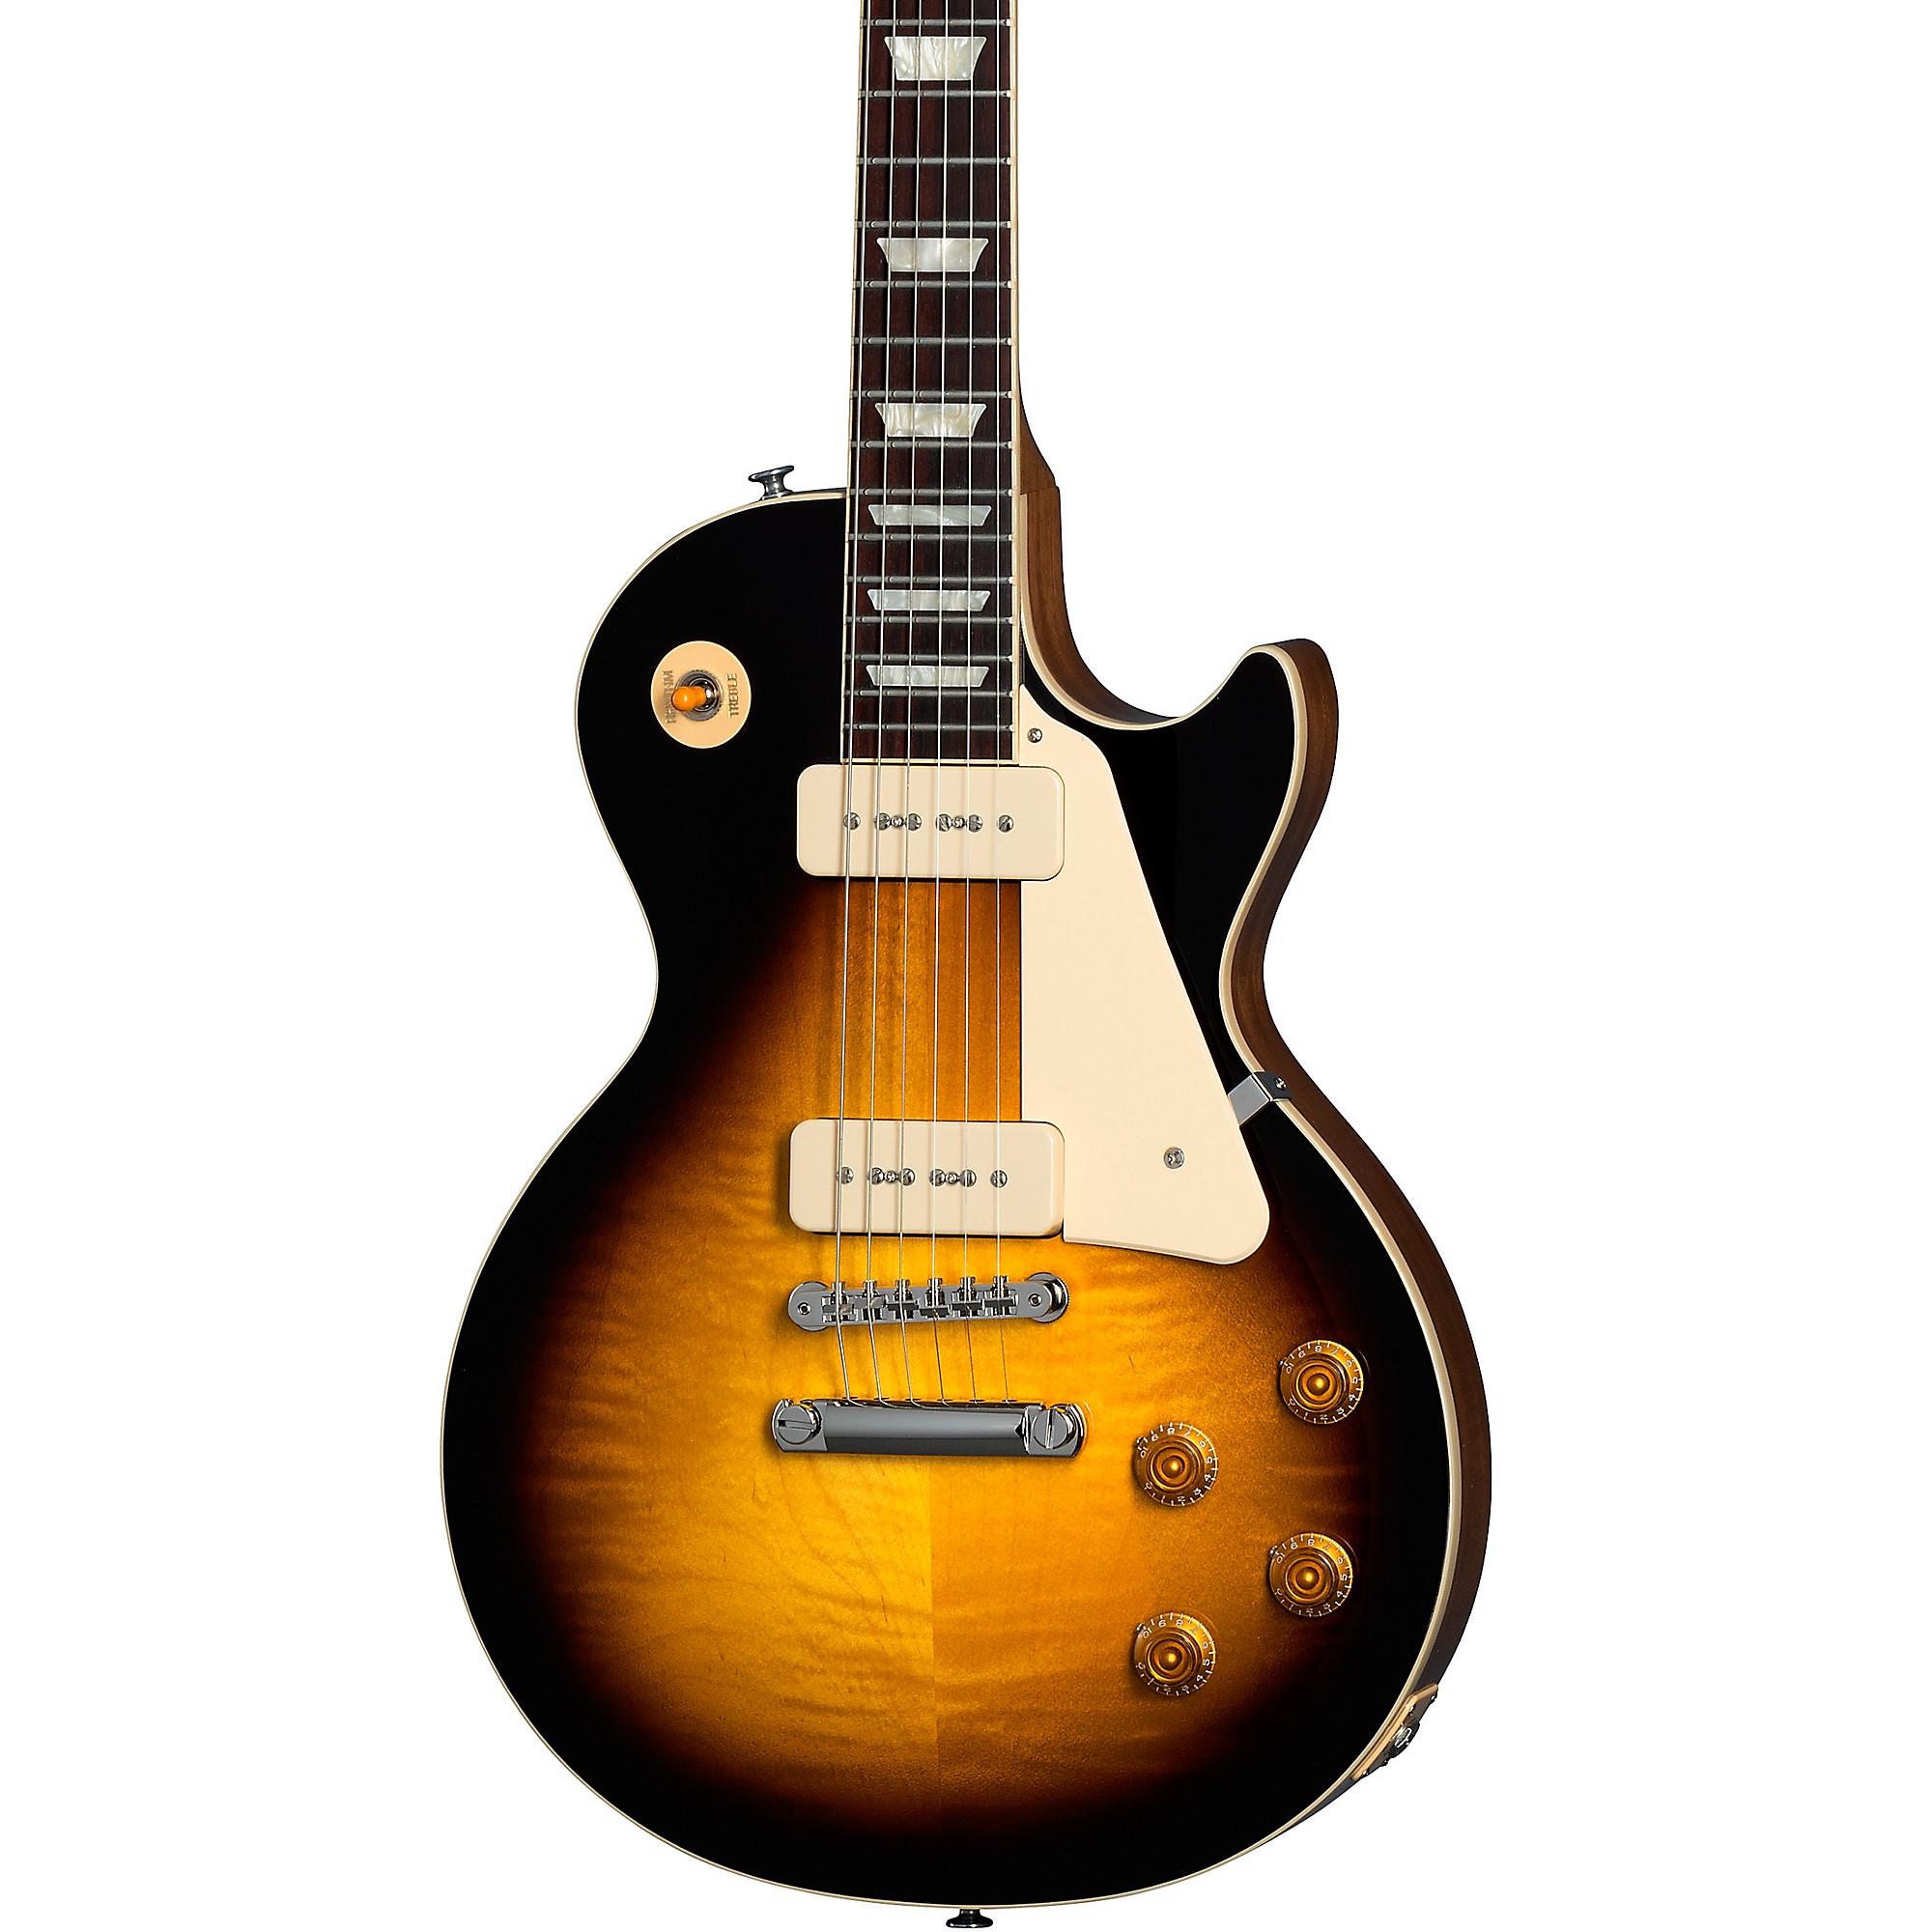 Gibson Les Paul Standard '50s P-90 Electric Guitar Tobacco Burst